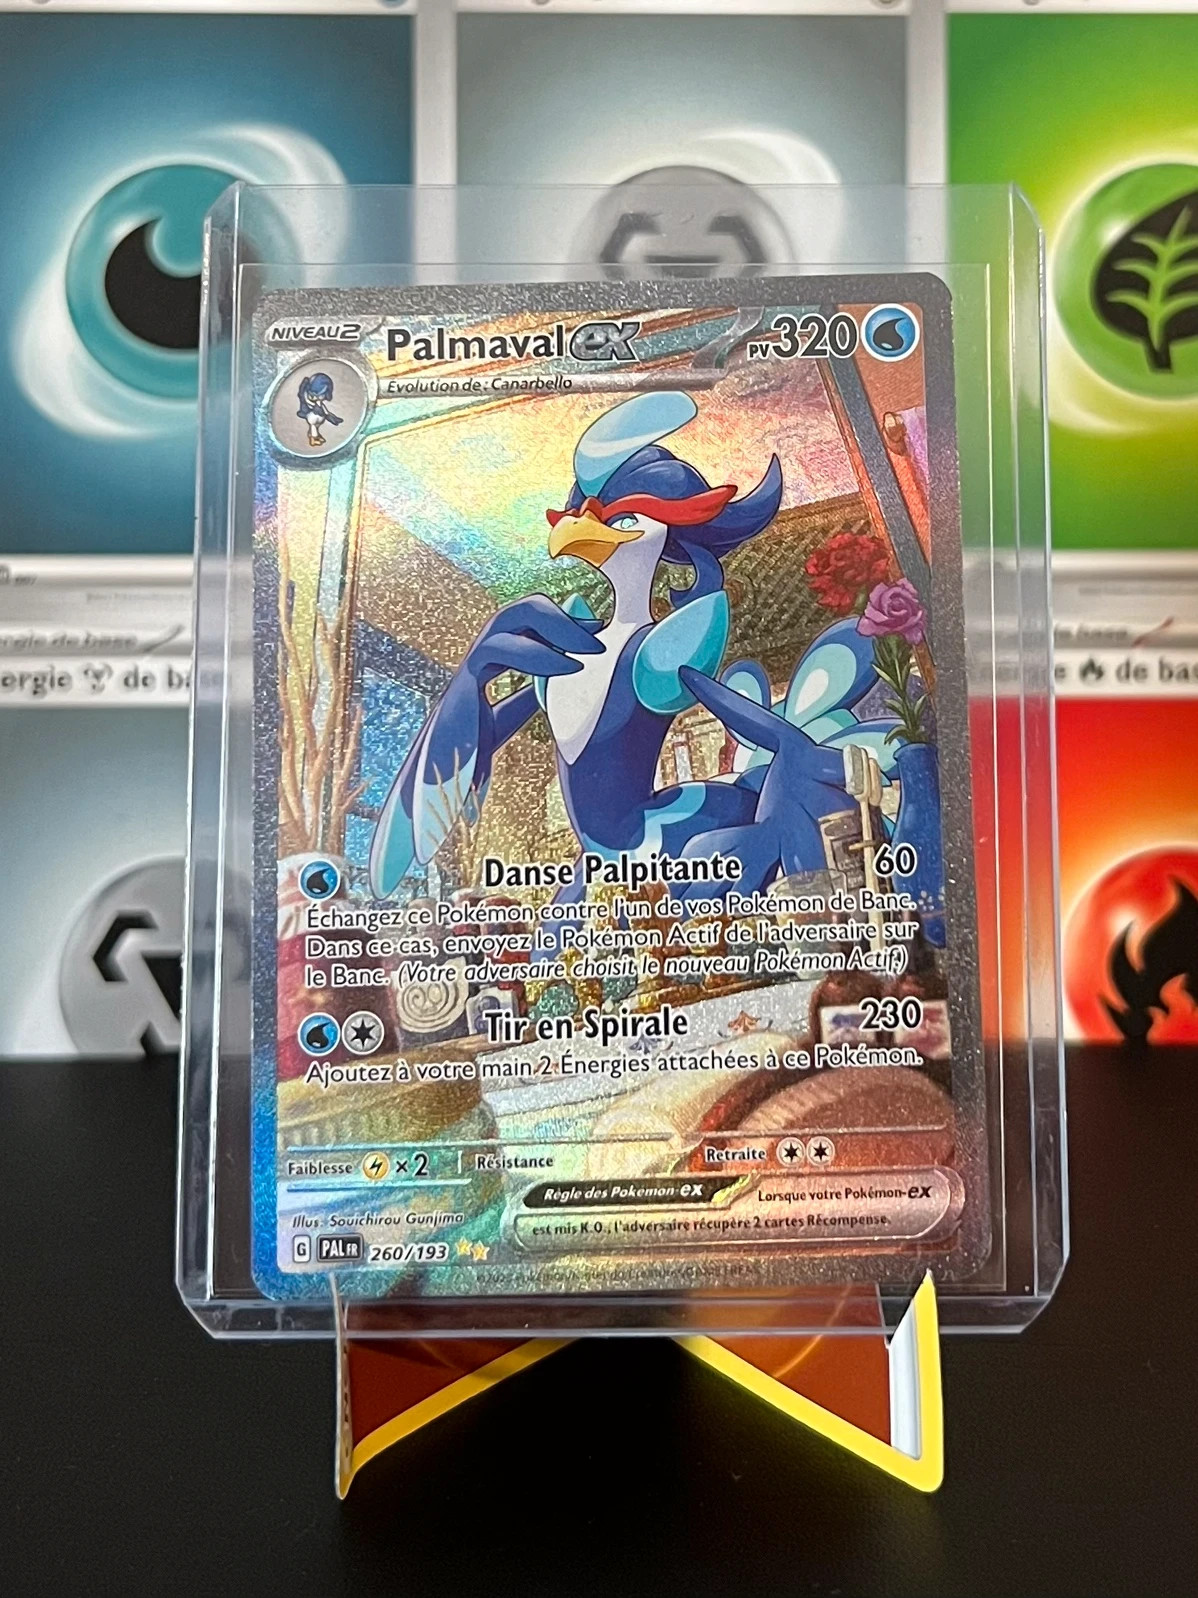 Palmaval-ex 260/193 Carte Pokémon™ Illustration spéciale rare Neuve VF